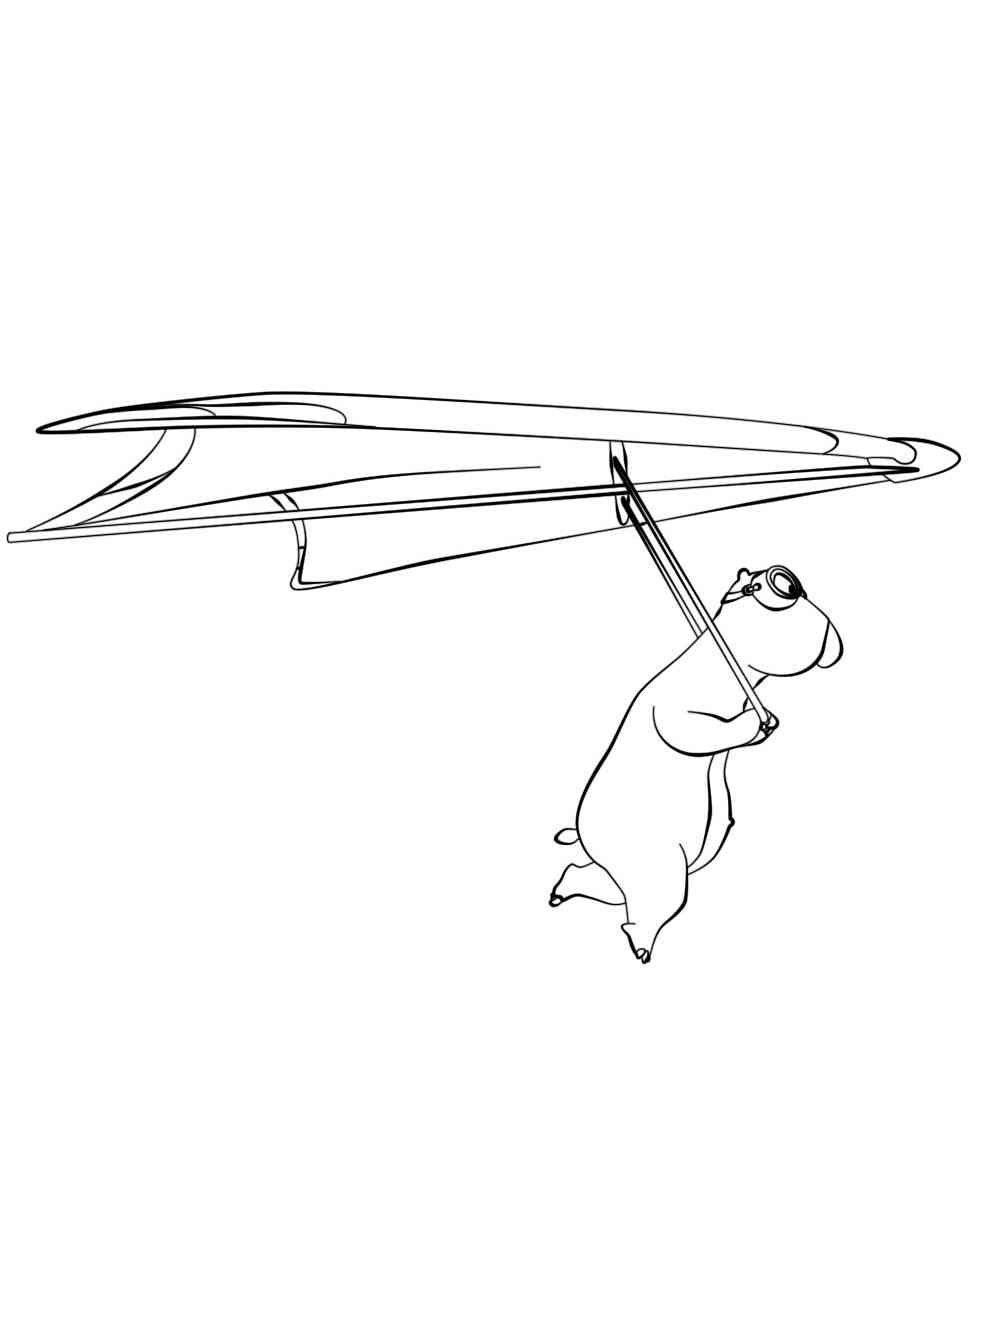 Bernard Bear flies on an airplane coloring page